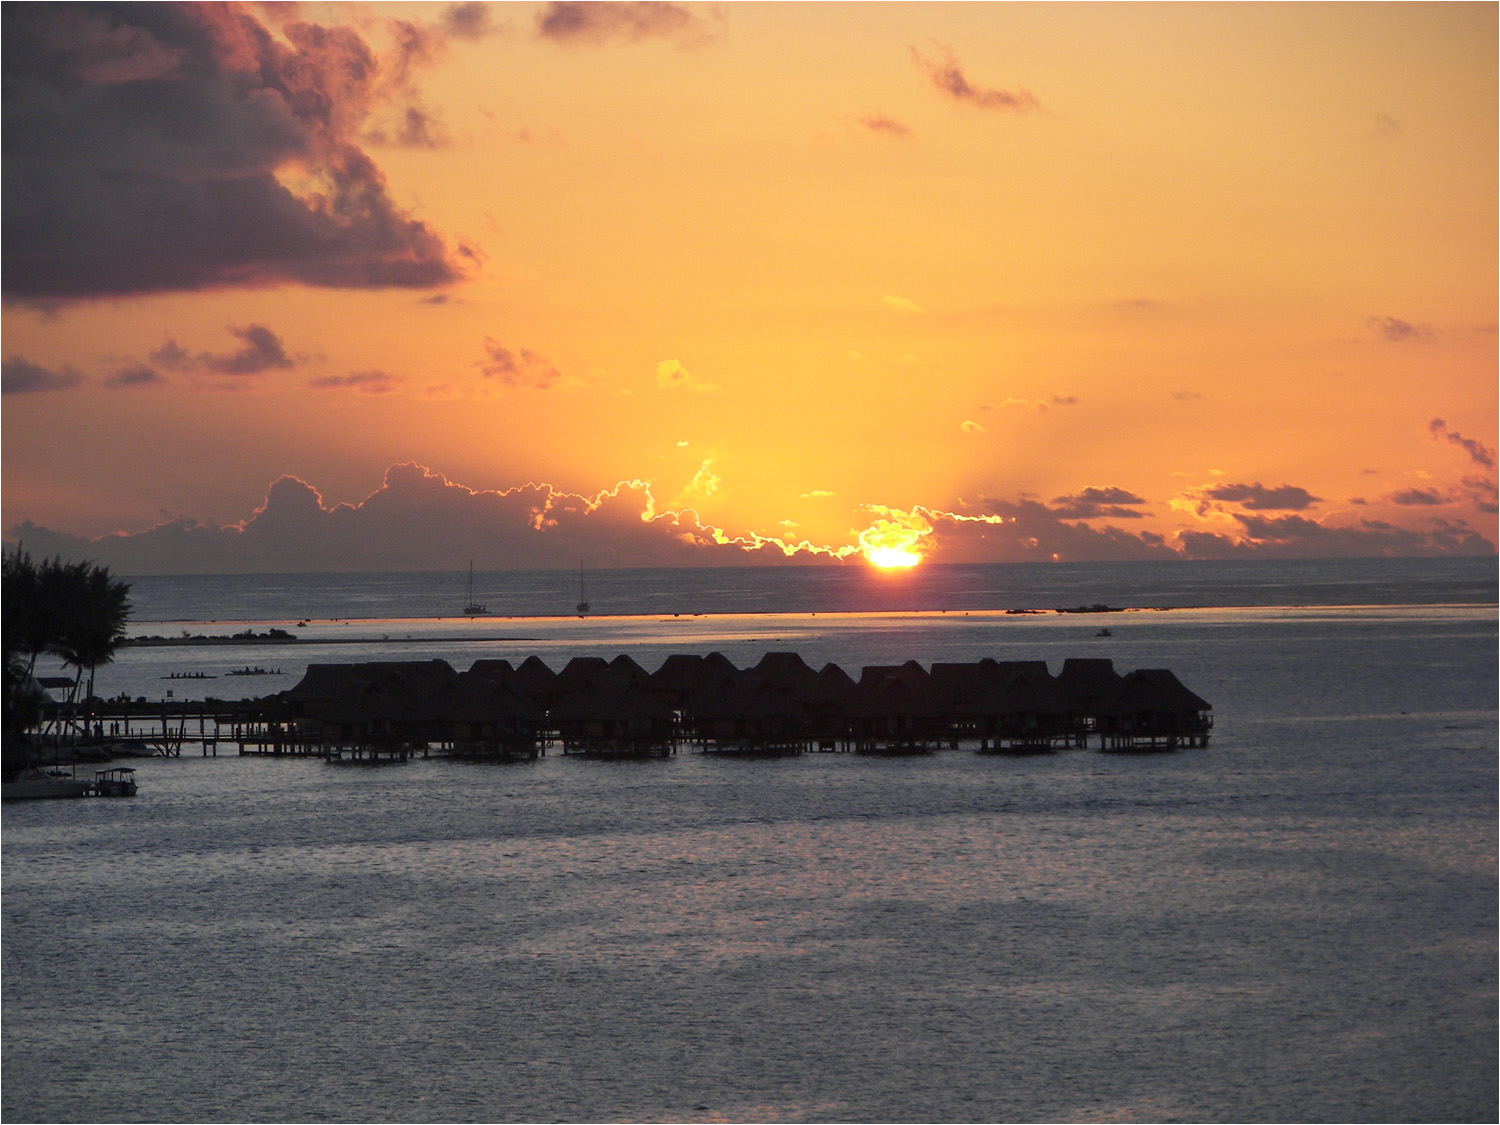 Sun setting Thursday in Bora Bora